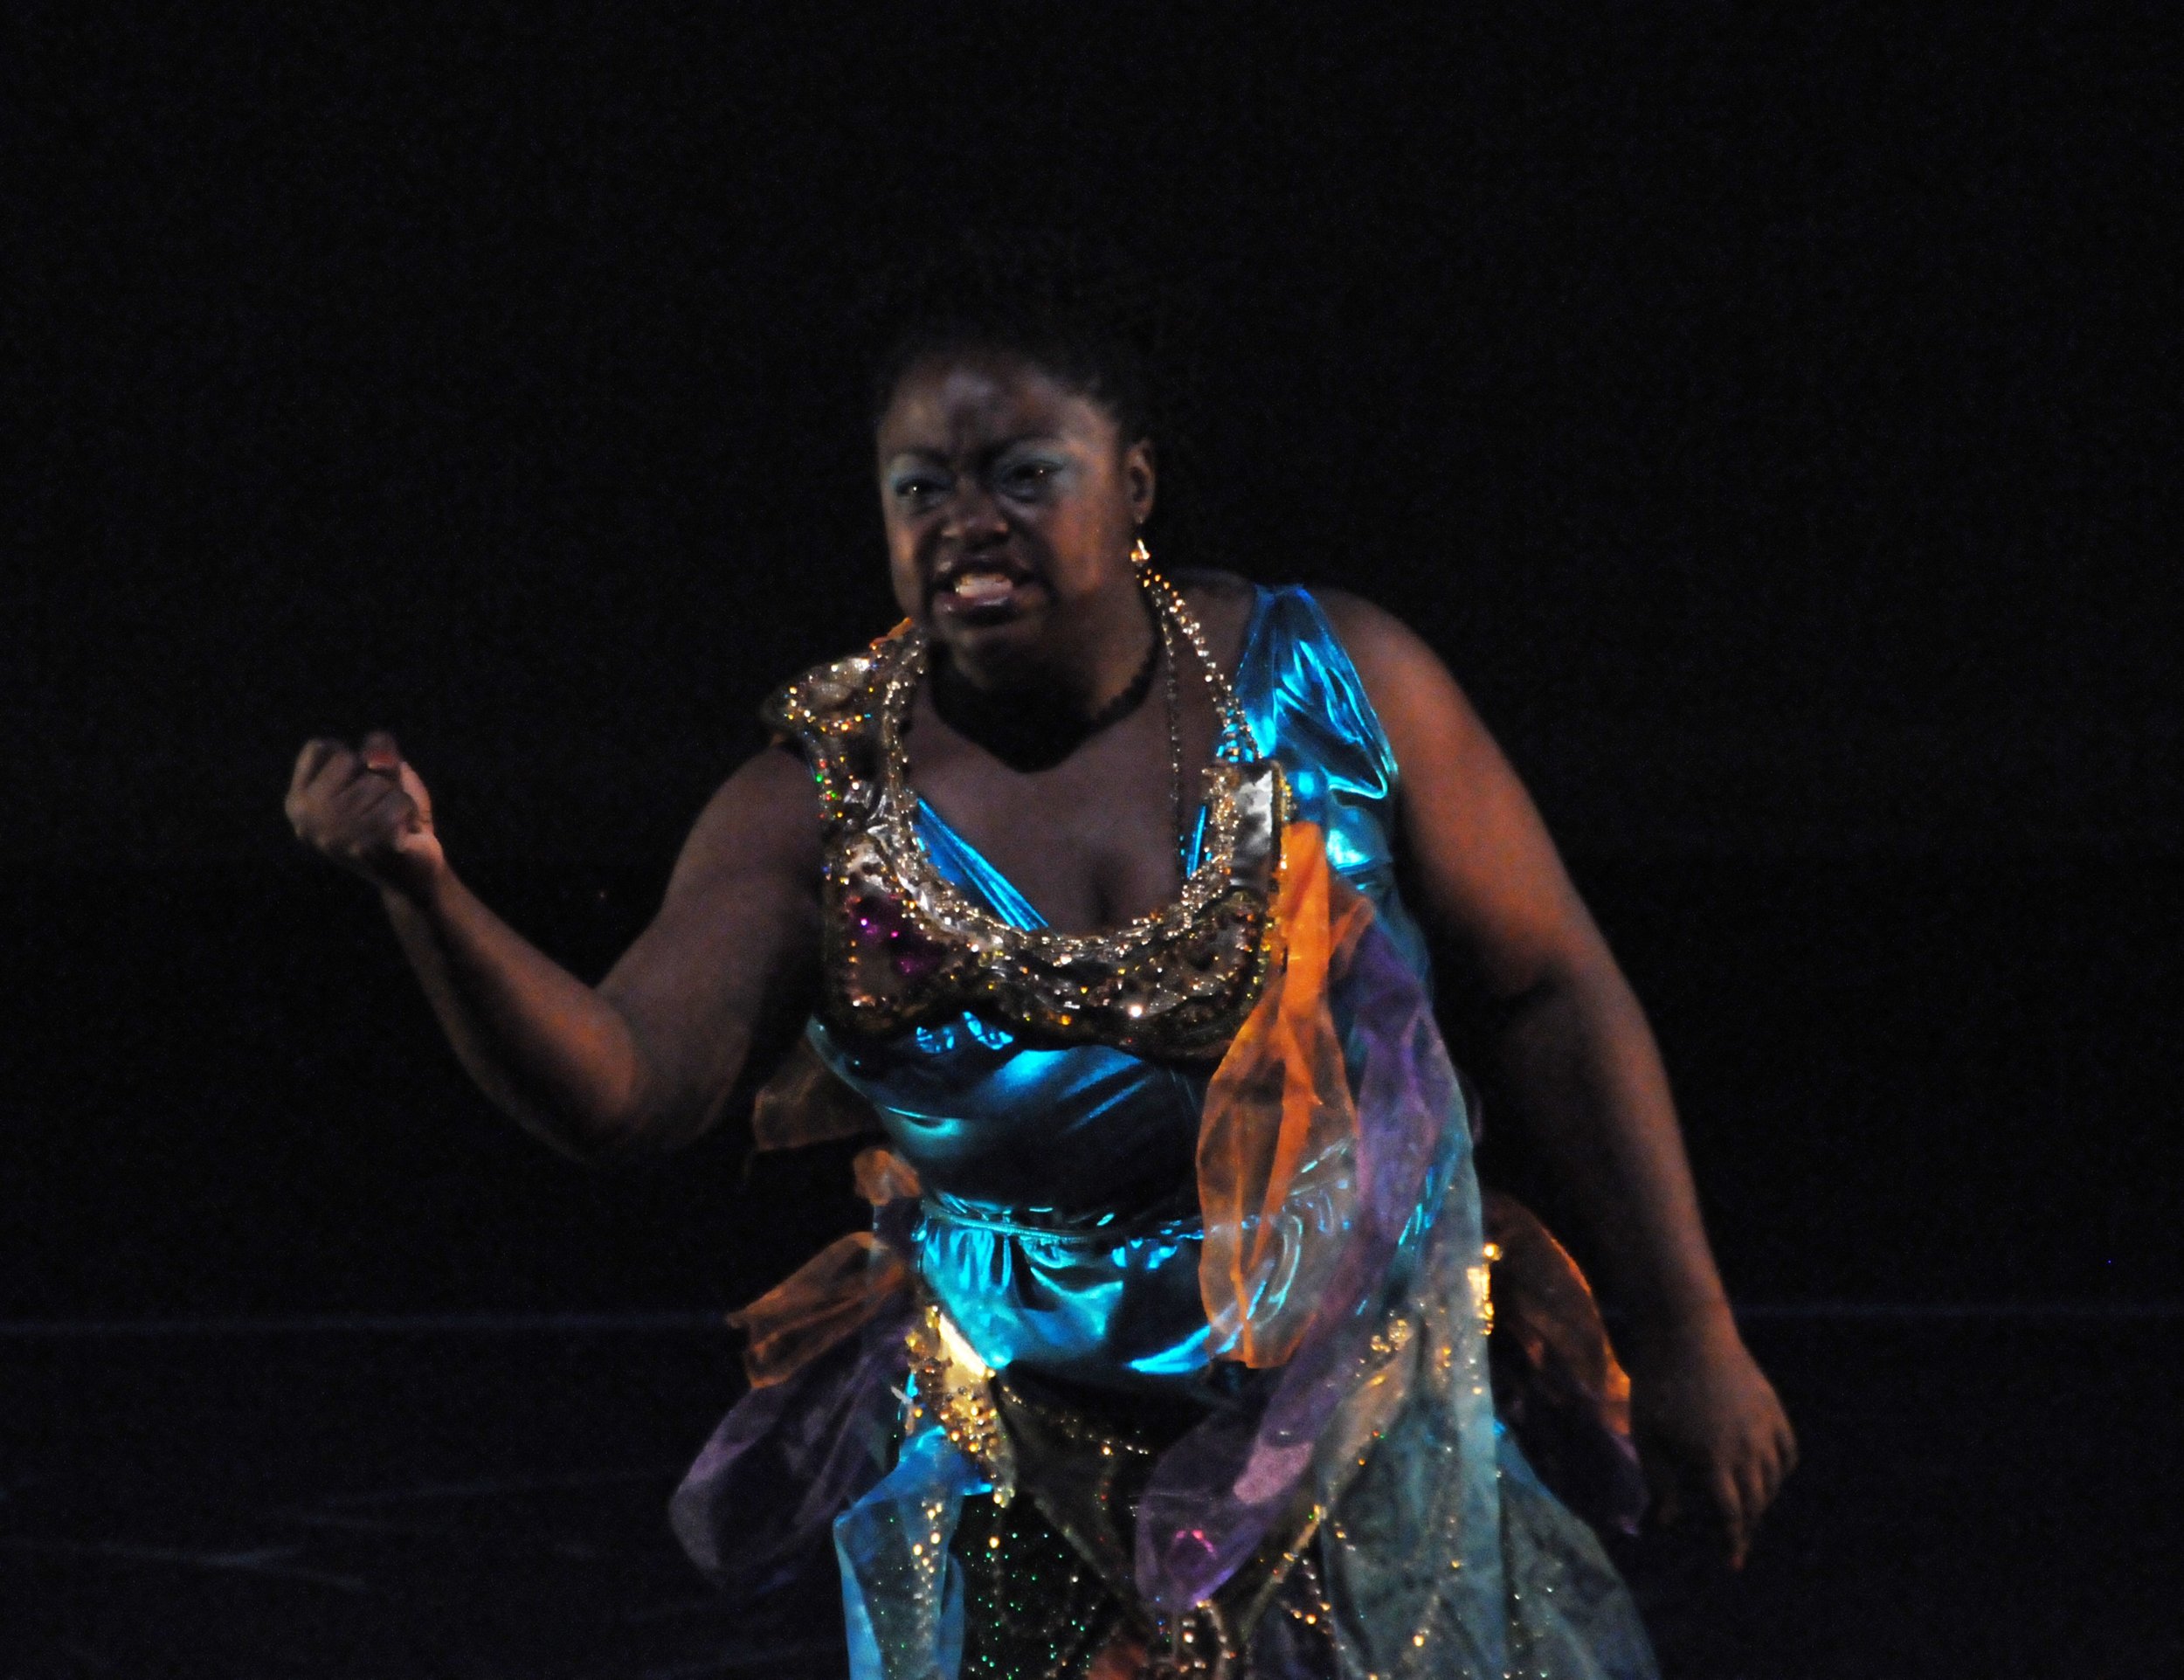 Rigidiggidim de Bamba de: Ruptured Calypso / Choreography: Cynthia Oliver / Photo: Paul Kopicki